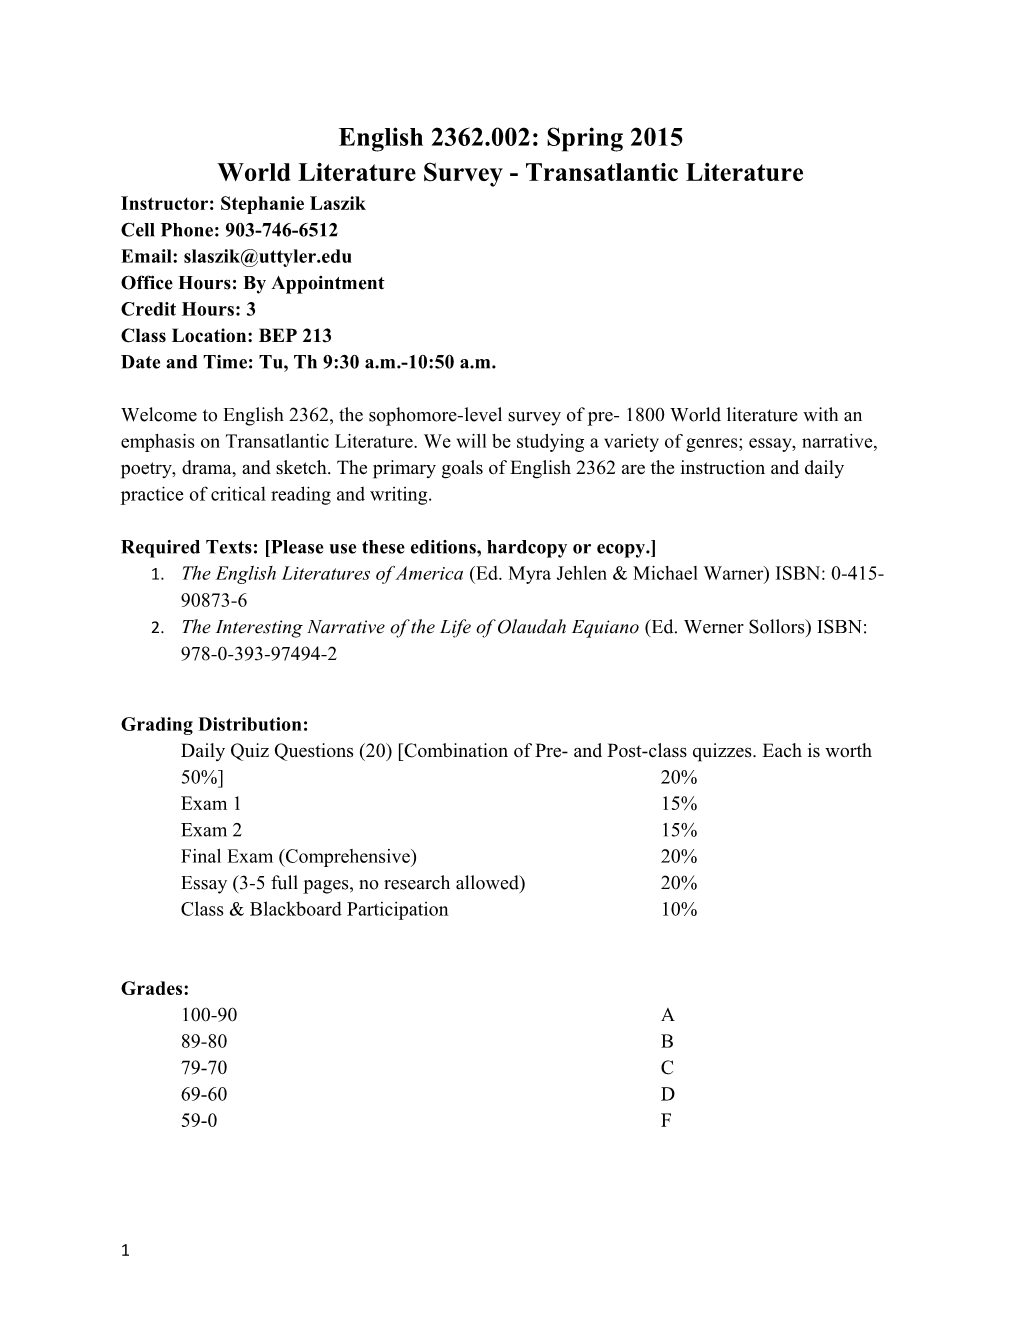 World Literature Survey - Transatlantic Literature